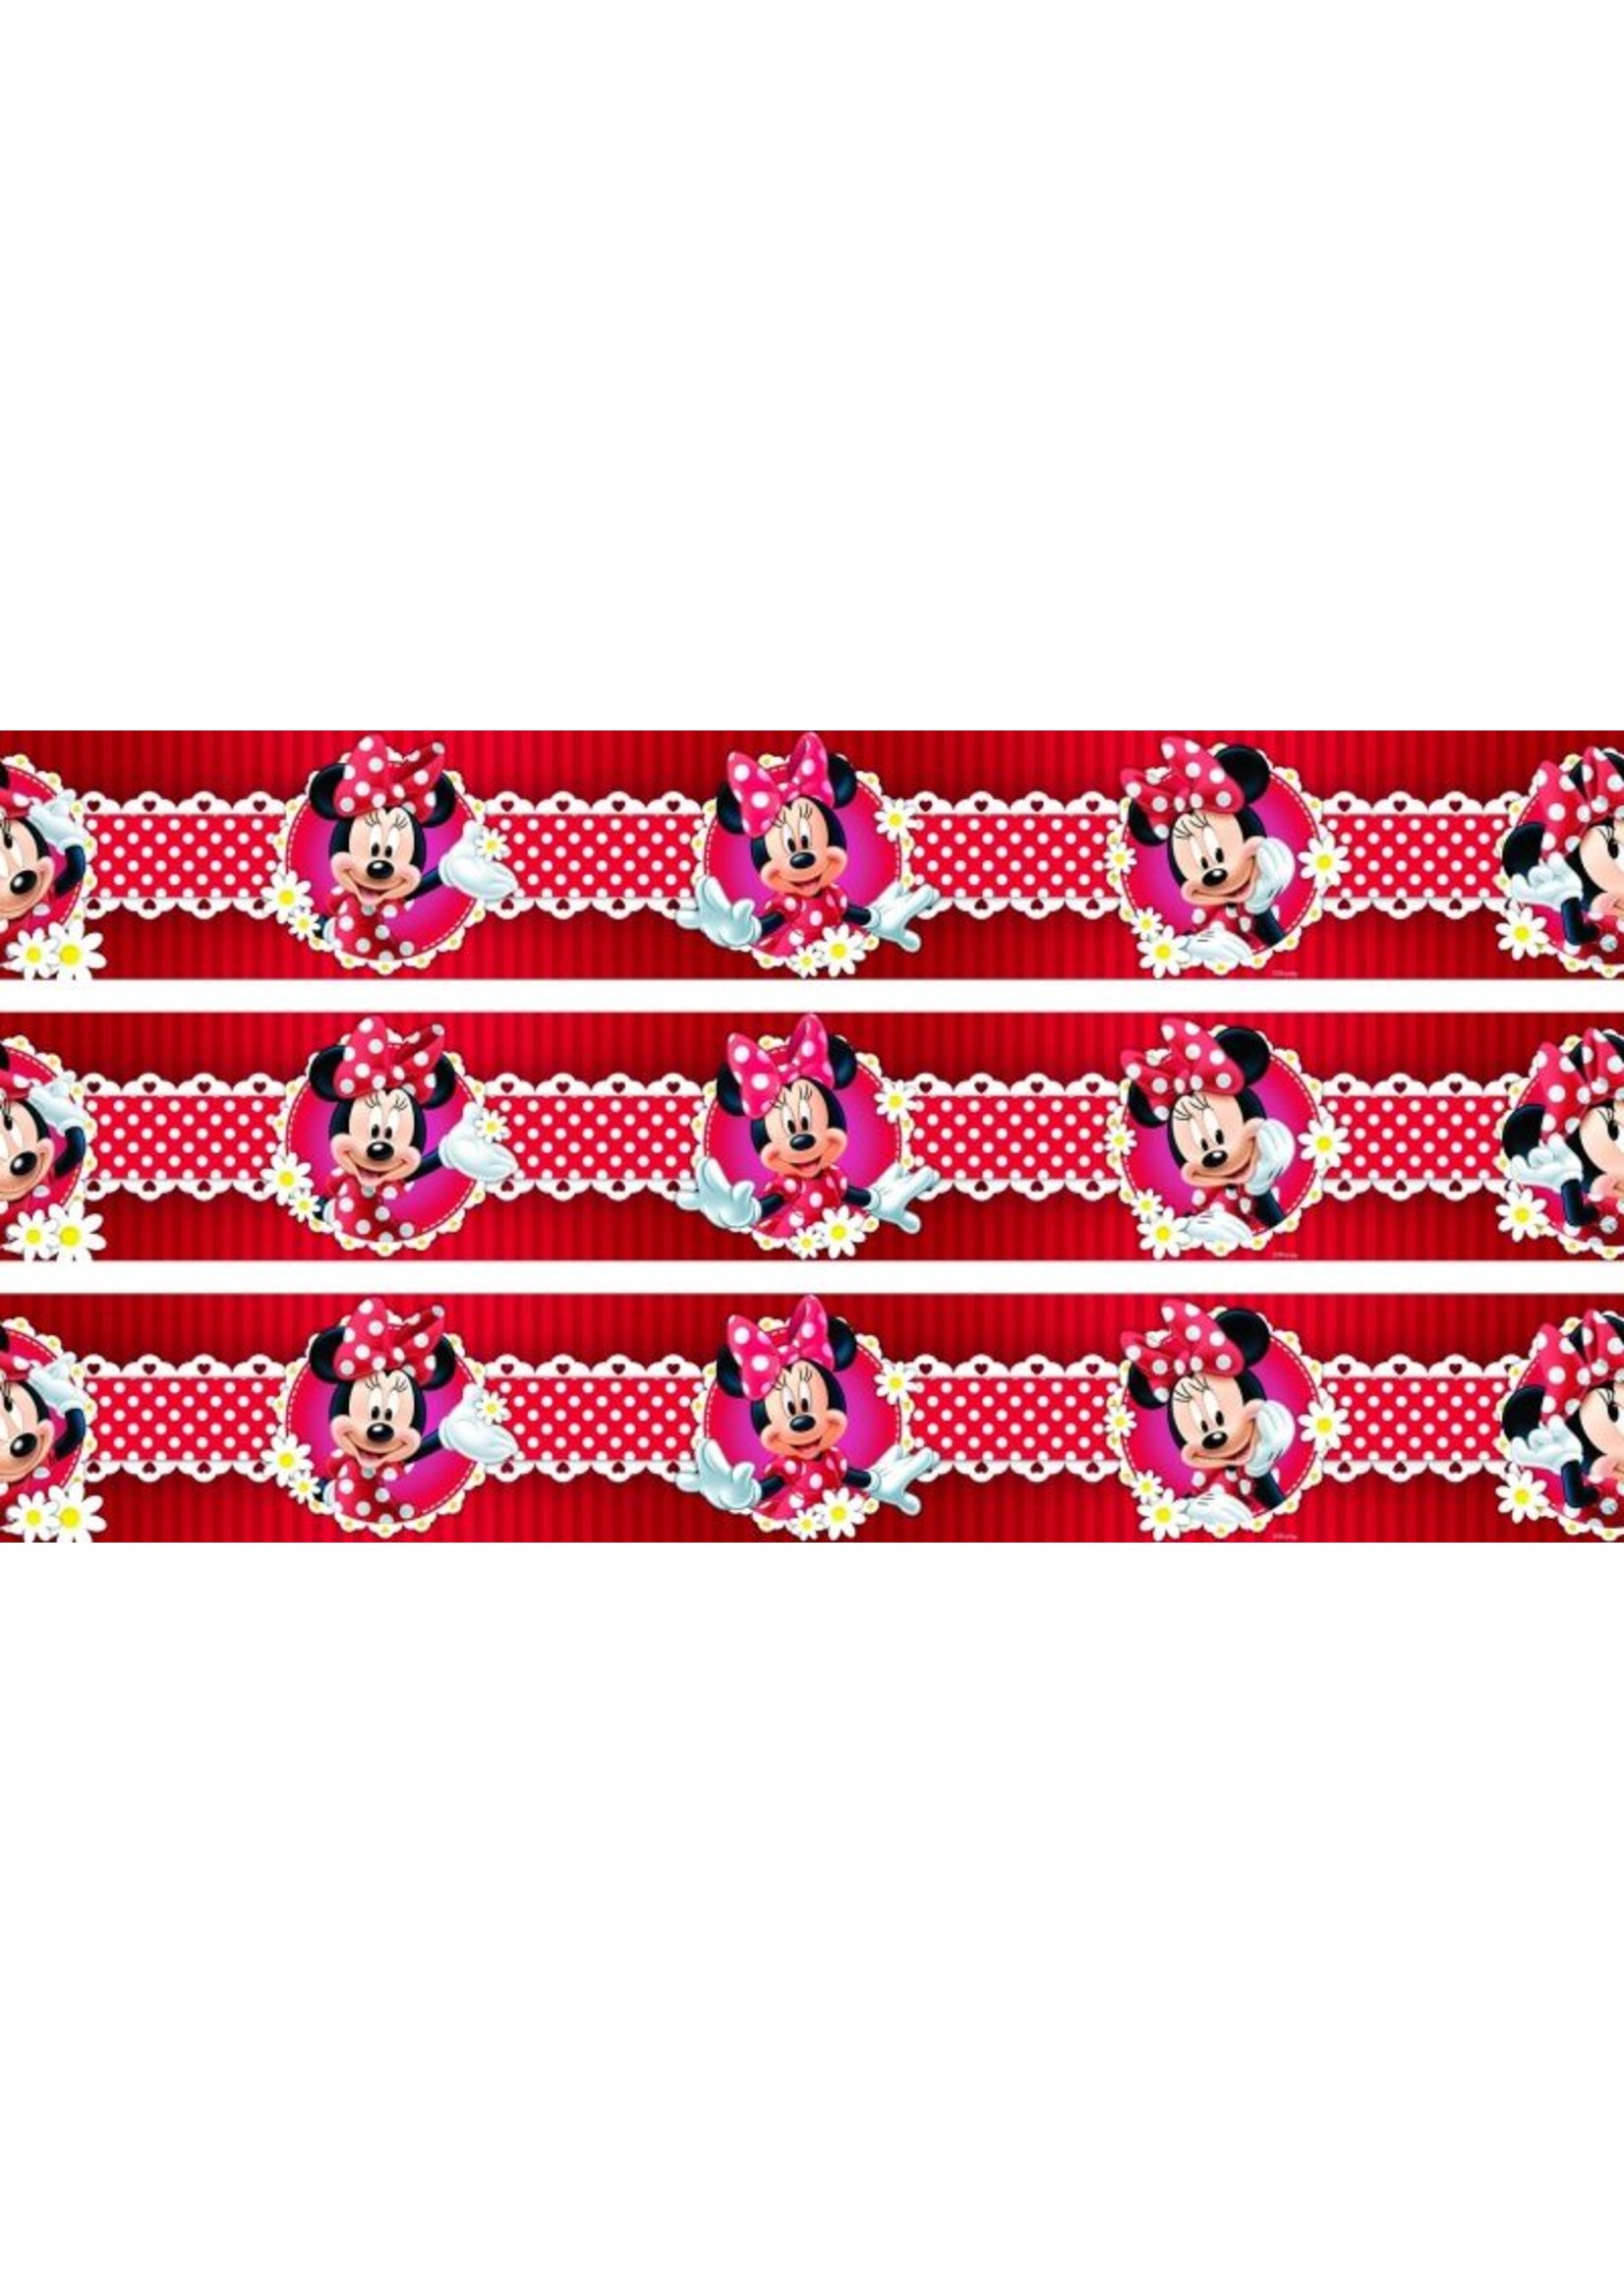 Disney Minnie Mouse Wallpaper Flower